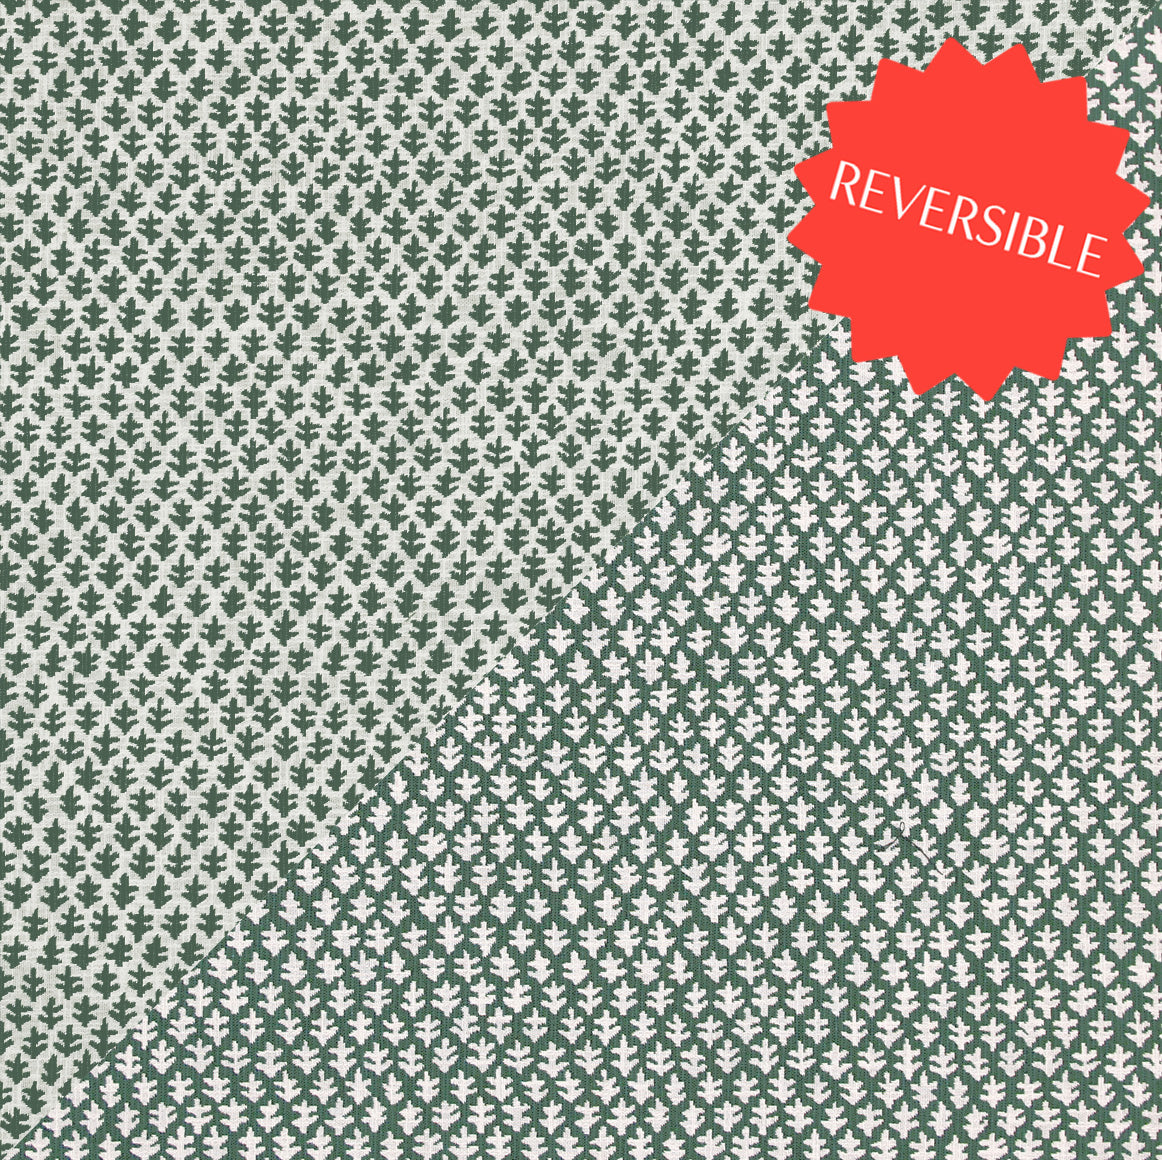 Burma Performance Fabric Sample ( Reversible)